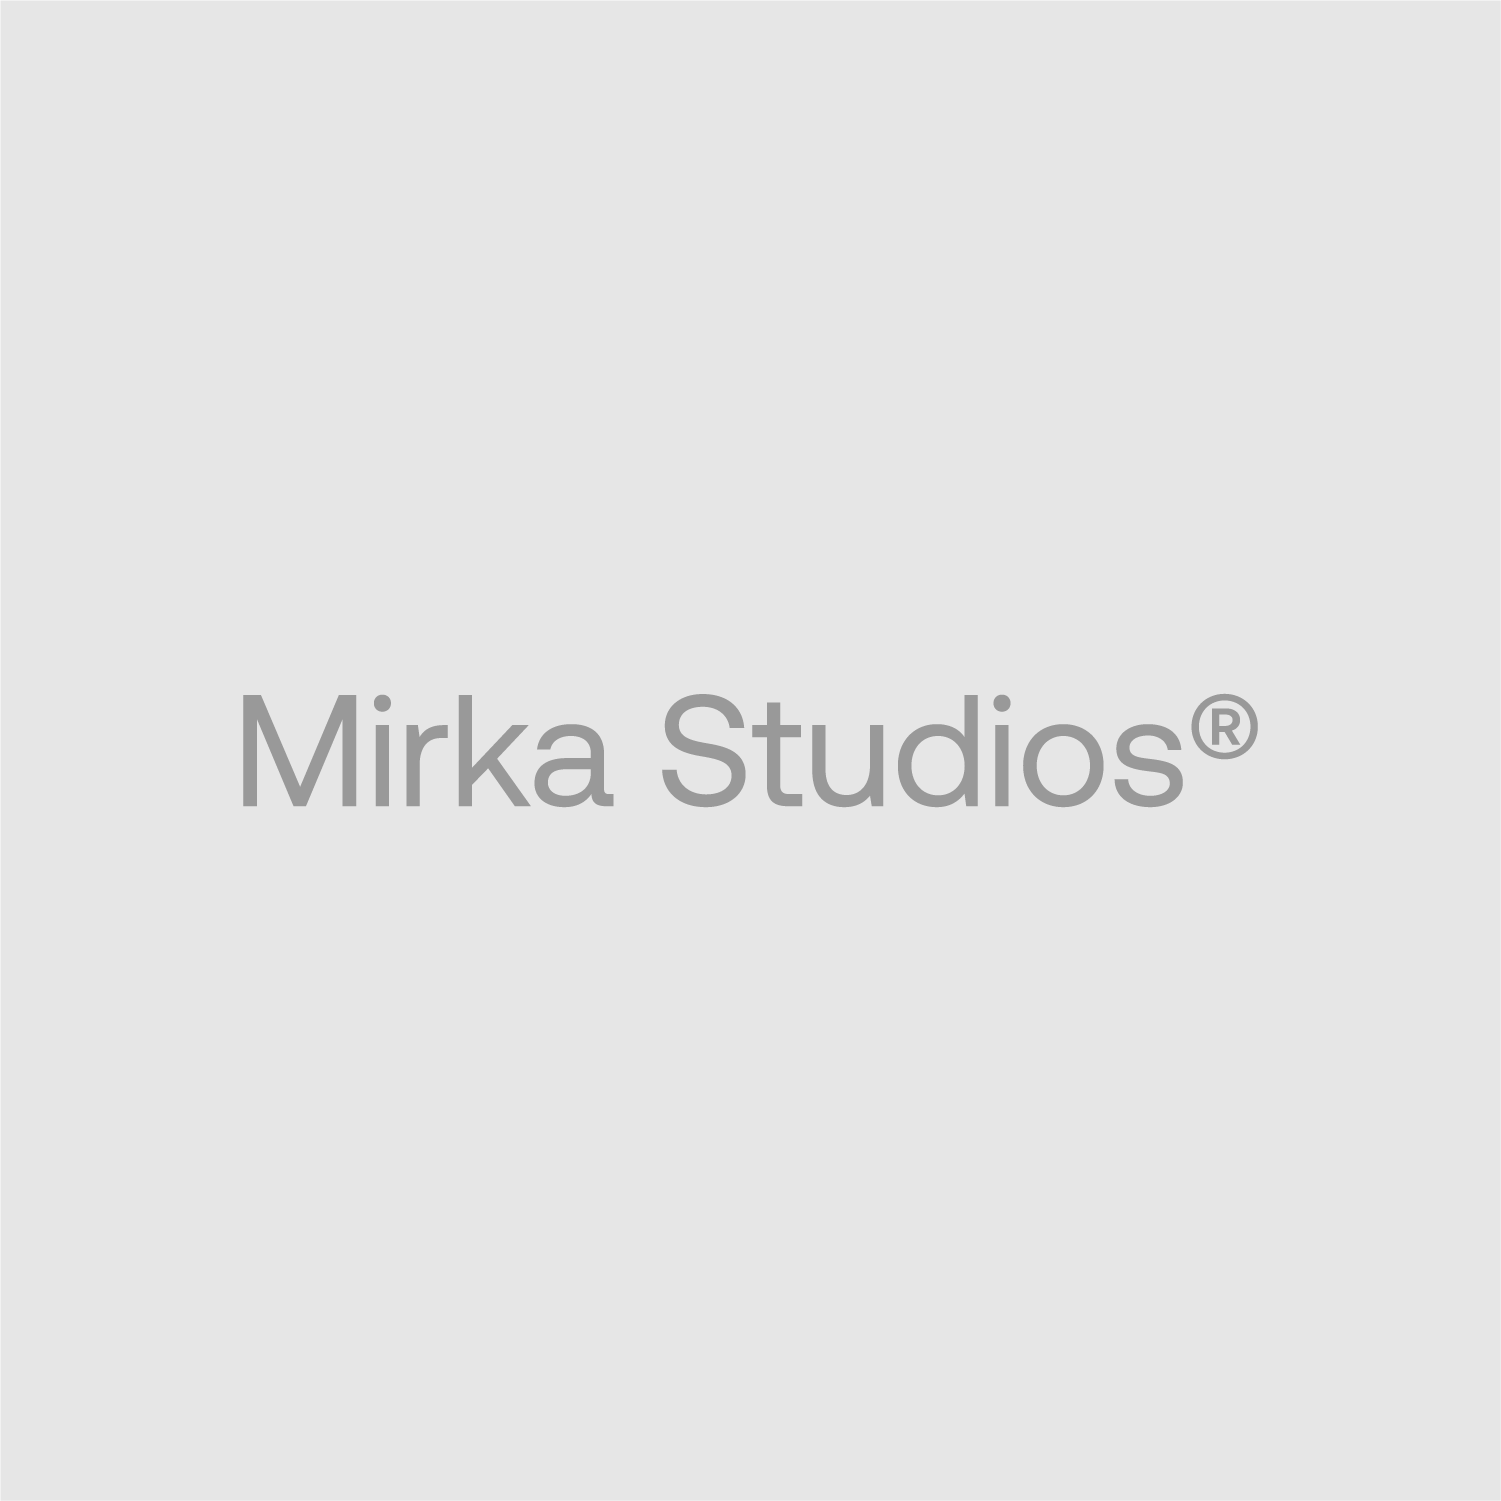 Mirka Studios on LogoLounge